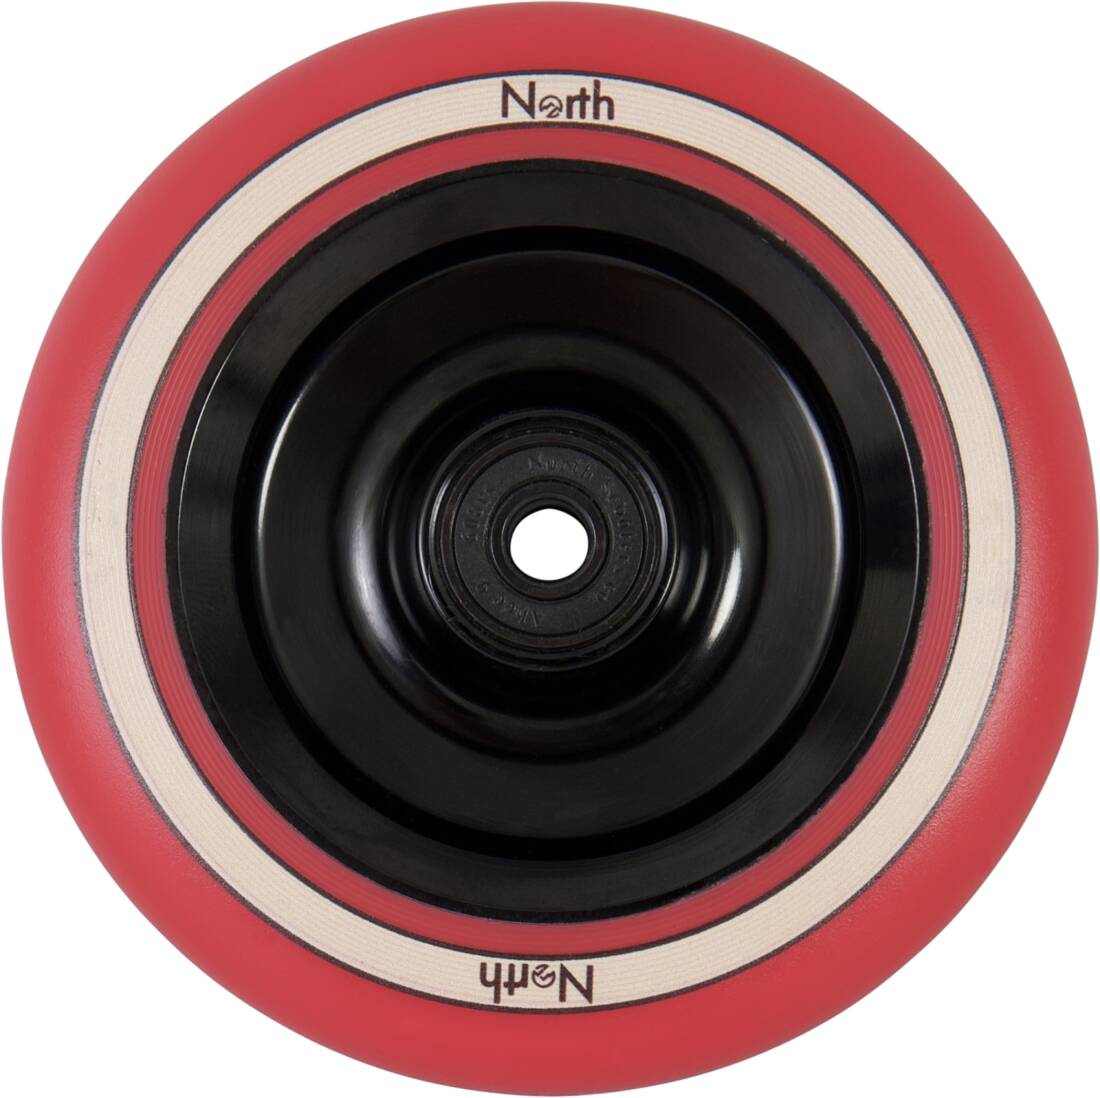 North Fullcore Pro Scooter Wheel - SeasideBMX - North